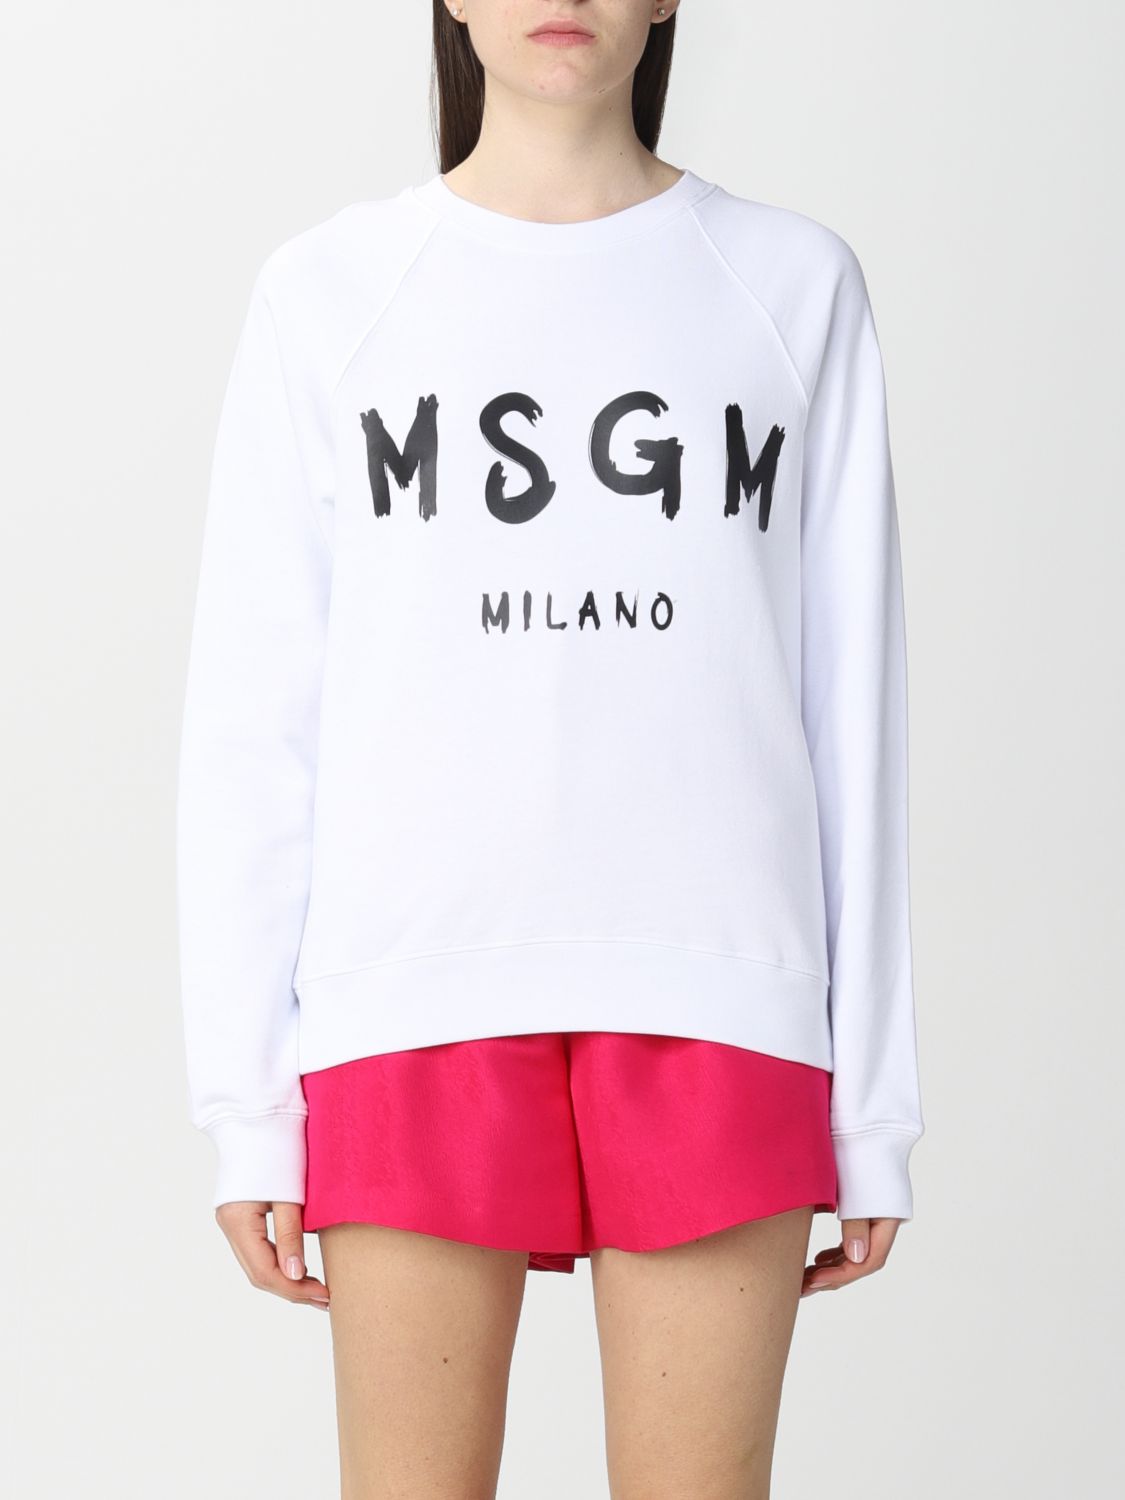 Msgm Sweatshirt  Women Color White